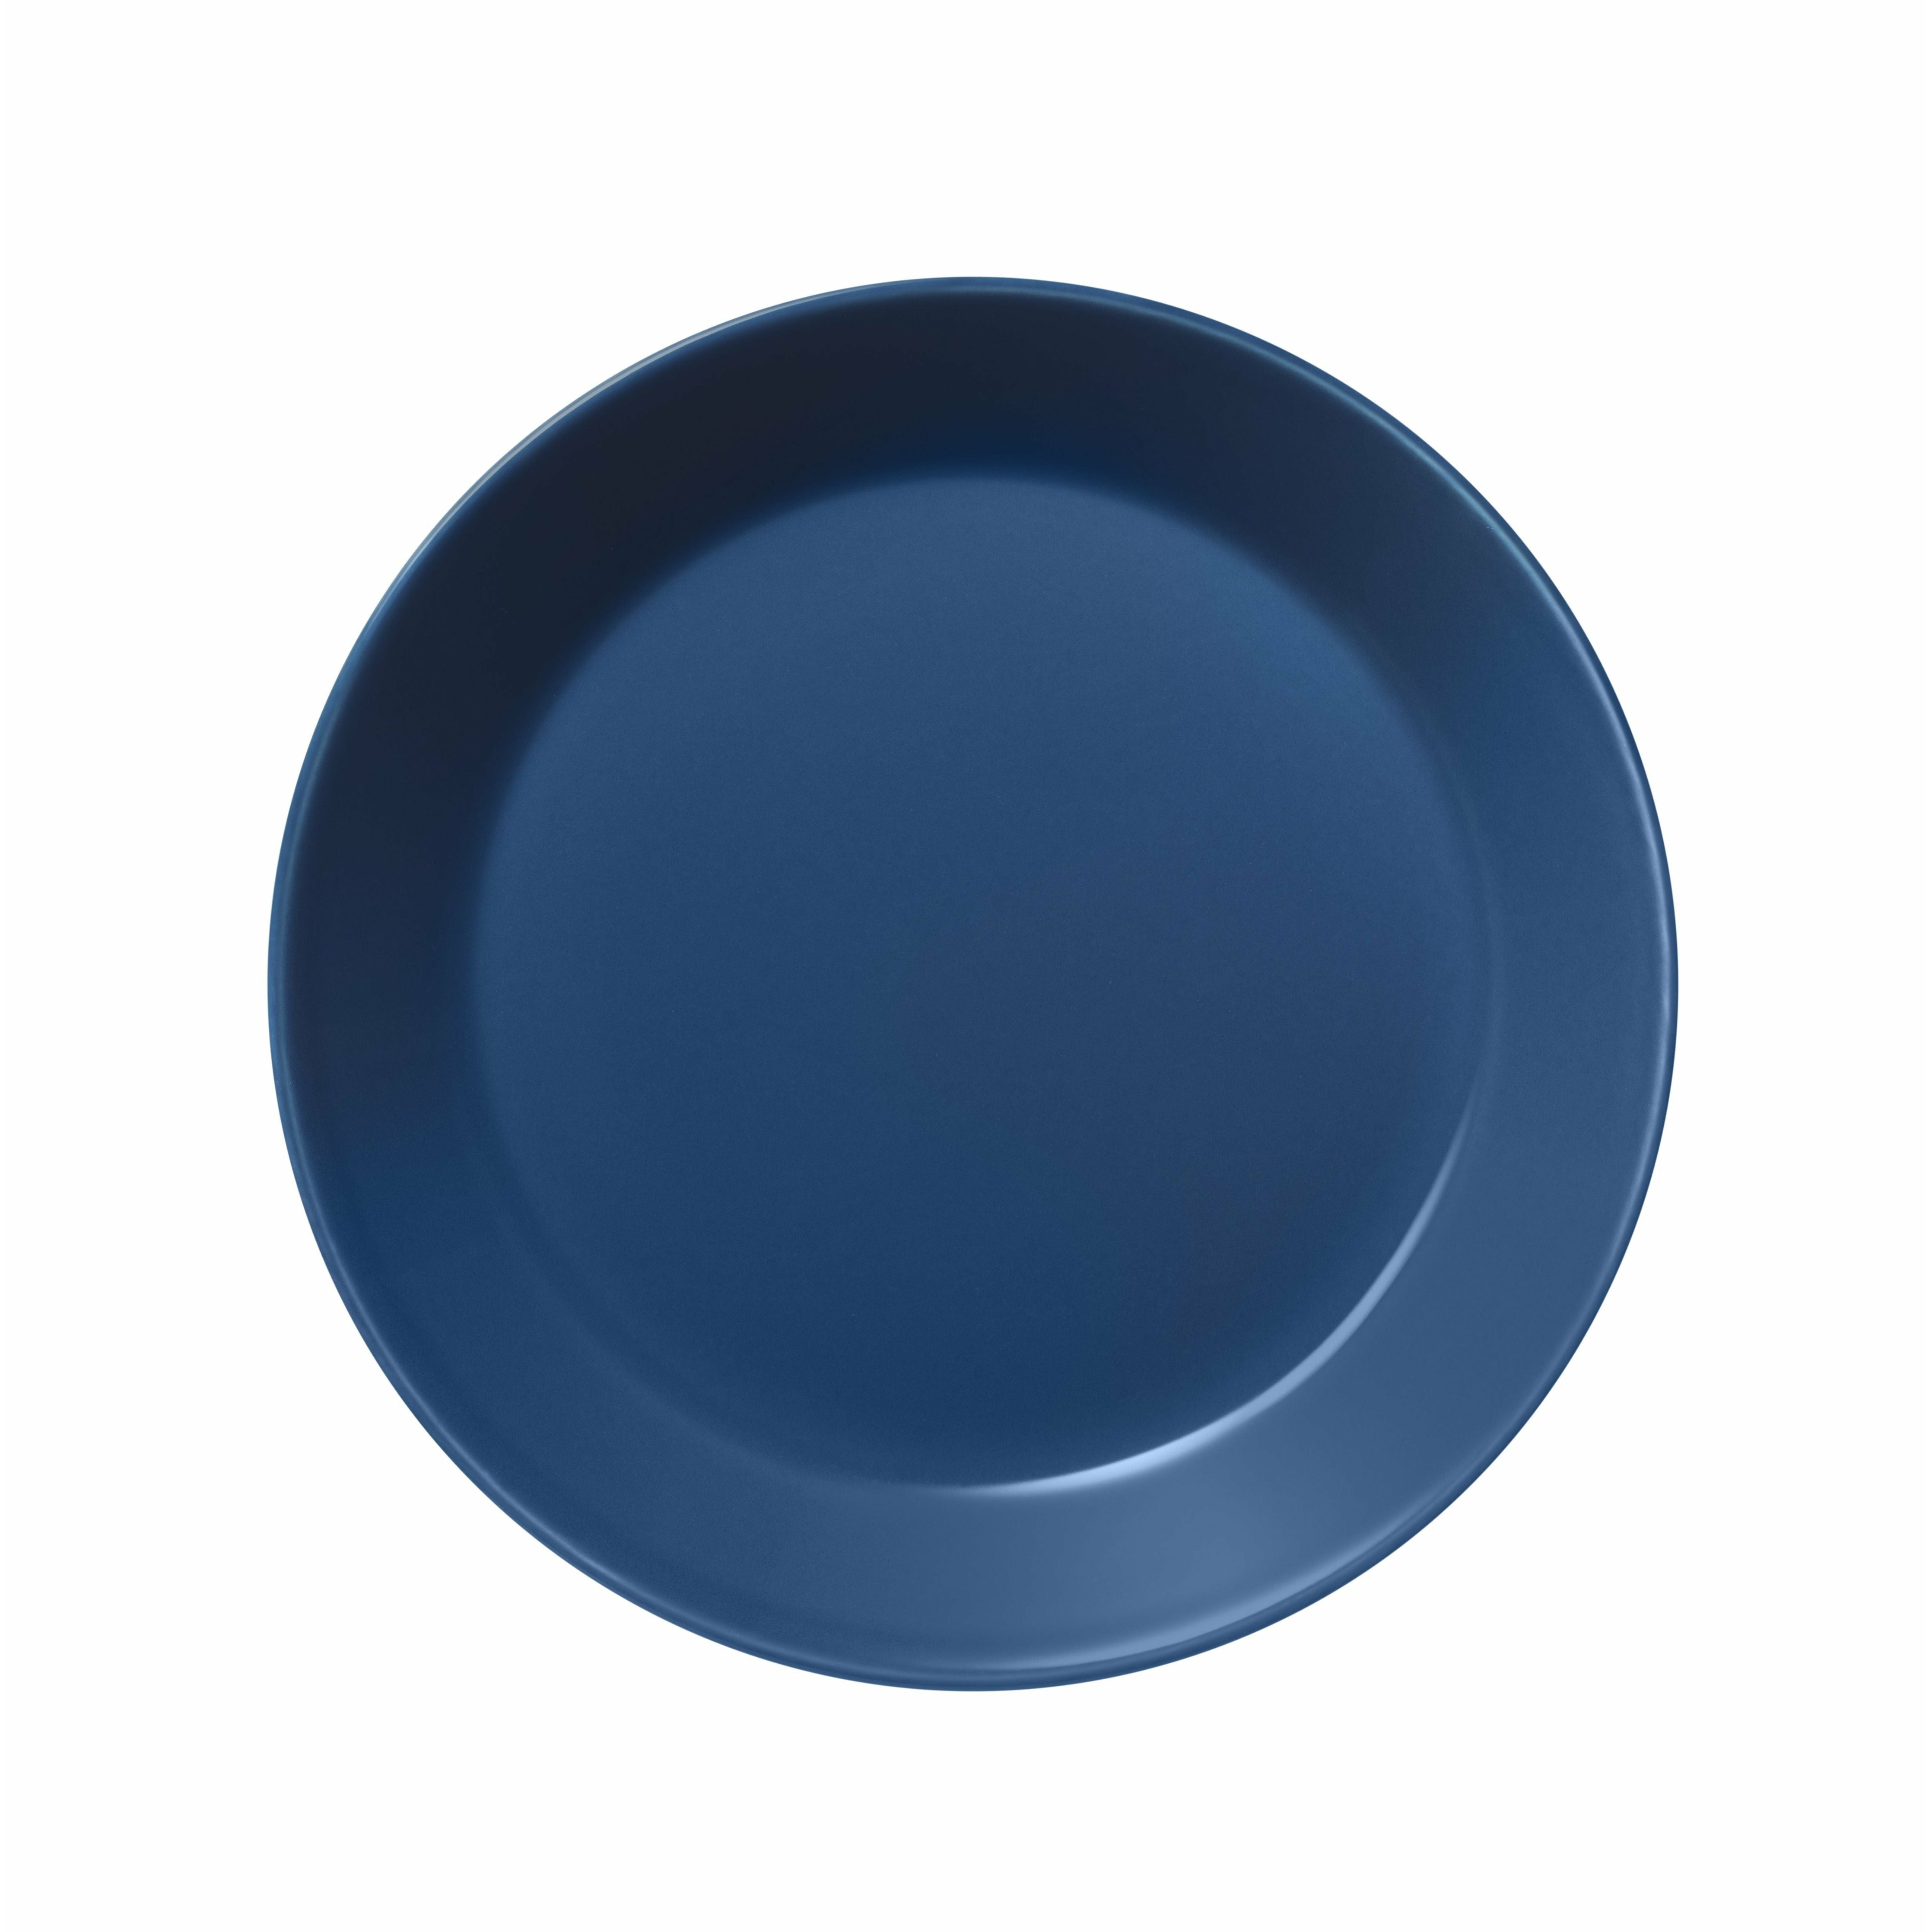 Iittala Plaque teema 17cm, bleu vintage